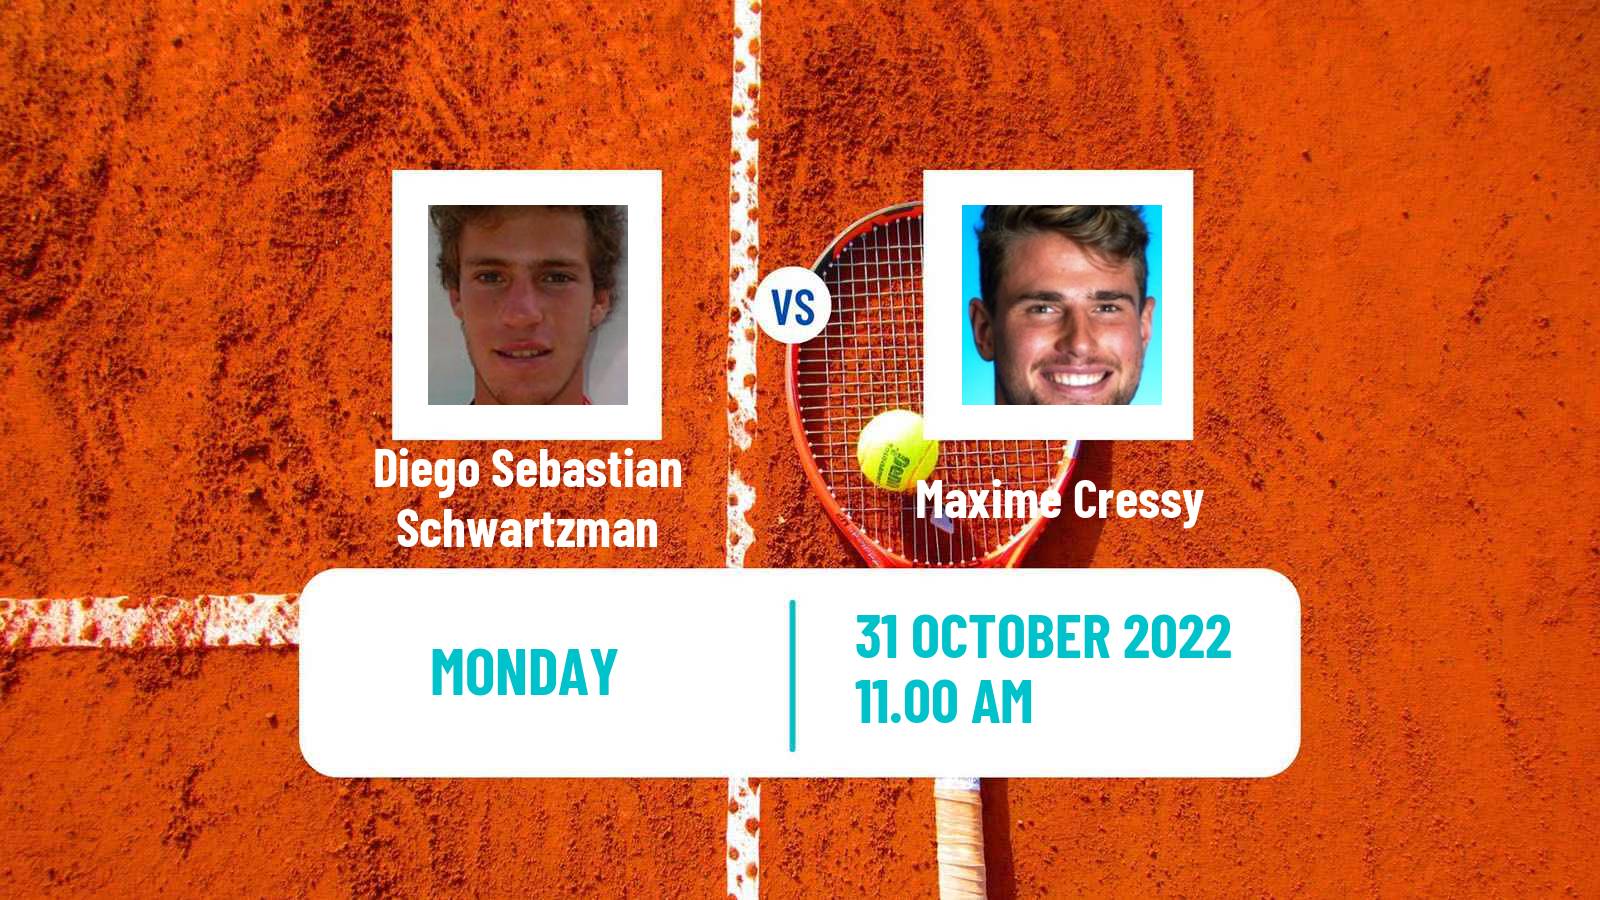 Tennis ATP Paris Diego Sebastian Schwartzman - Maxime Cressy